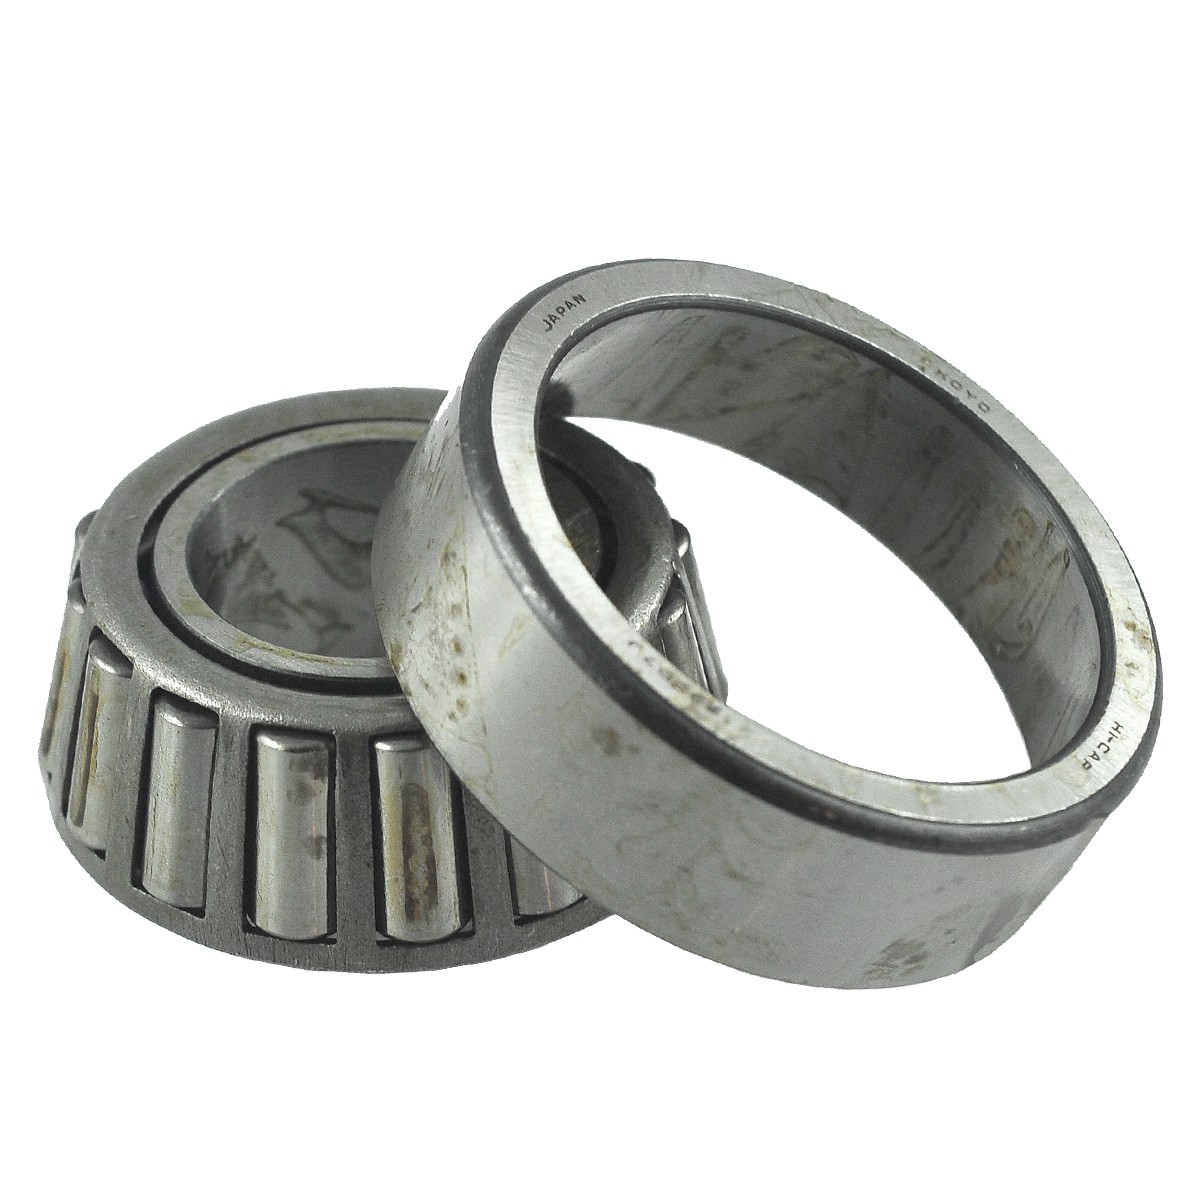 Tapered roller bearing / 33207J / 35 x 72 x 28 mm / Kubota M5000/M6040/M7040/M8540 / 3C011-43380 / 6-23-112-03